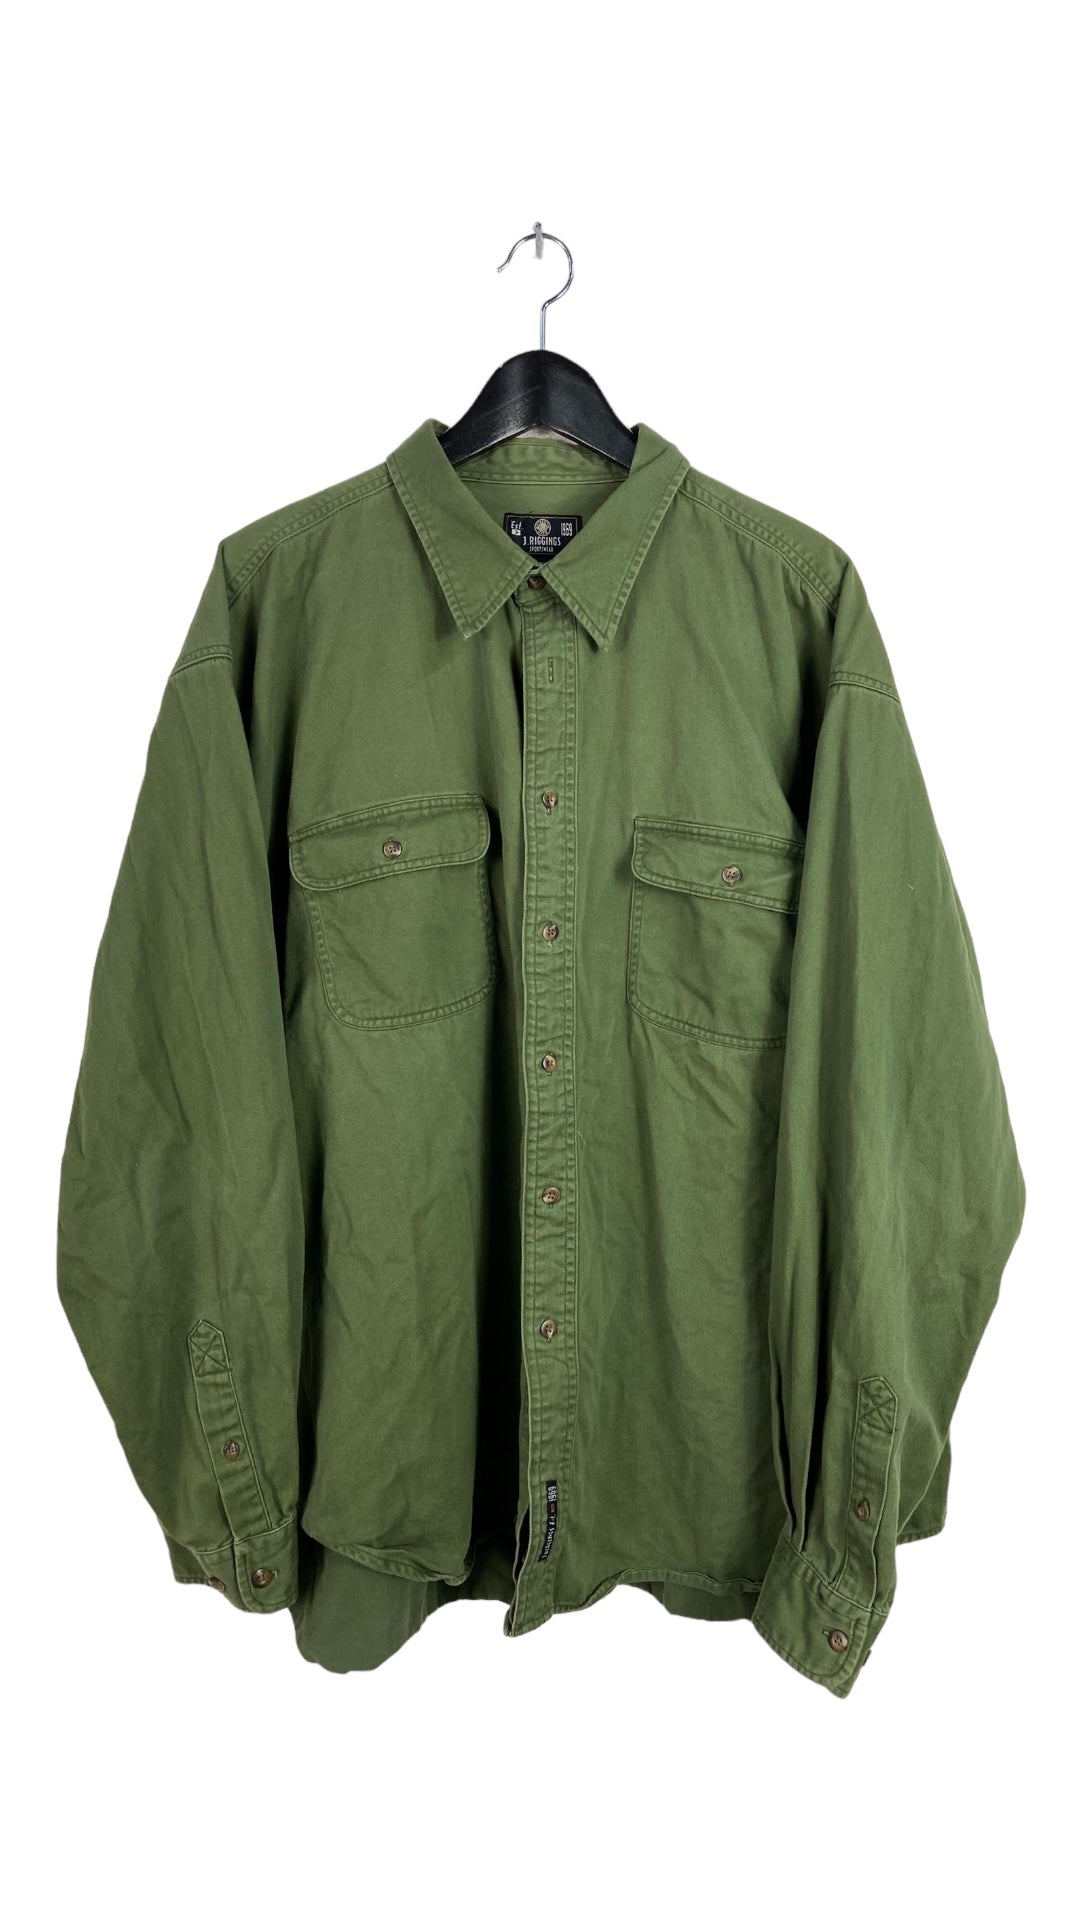 VTG J Riggins Sportswear Olive Green Button Up Shirt Sz 2XL